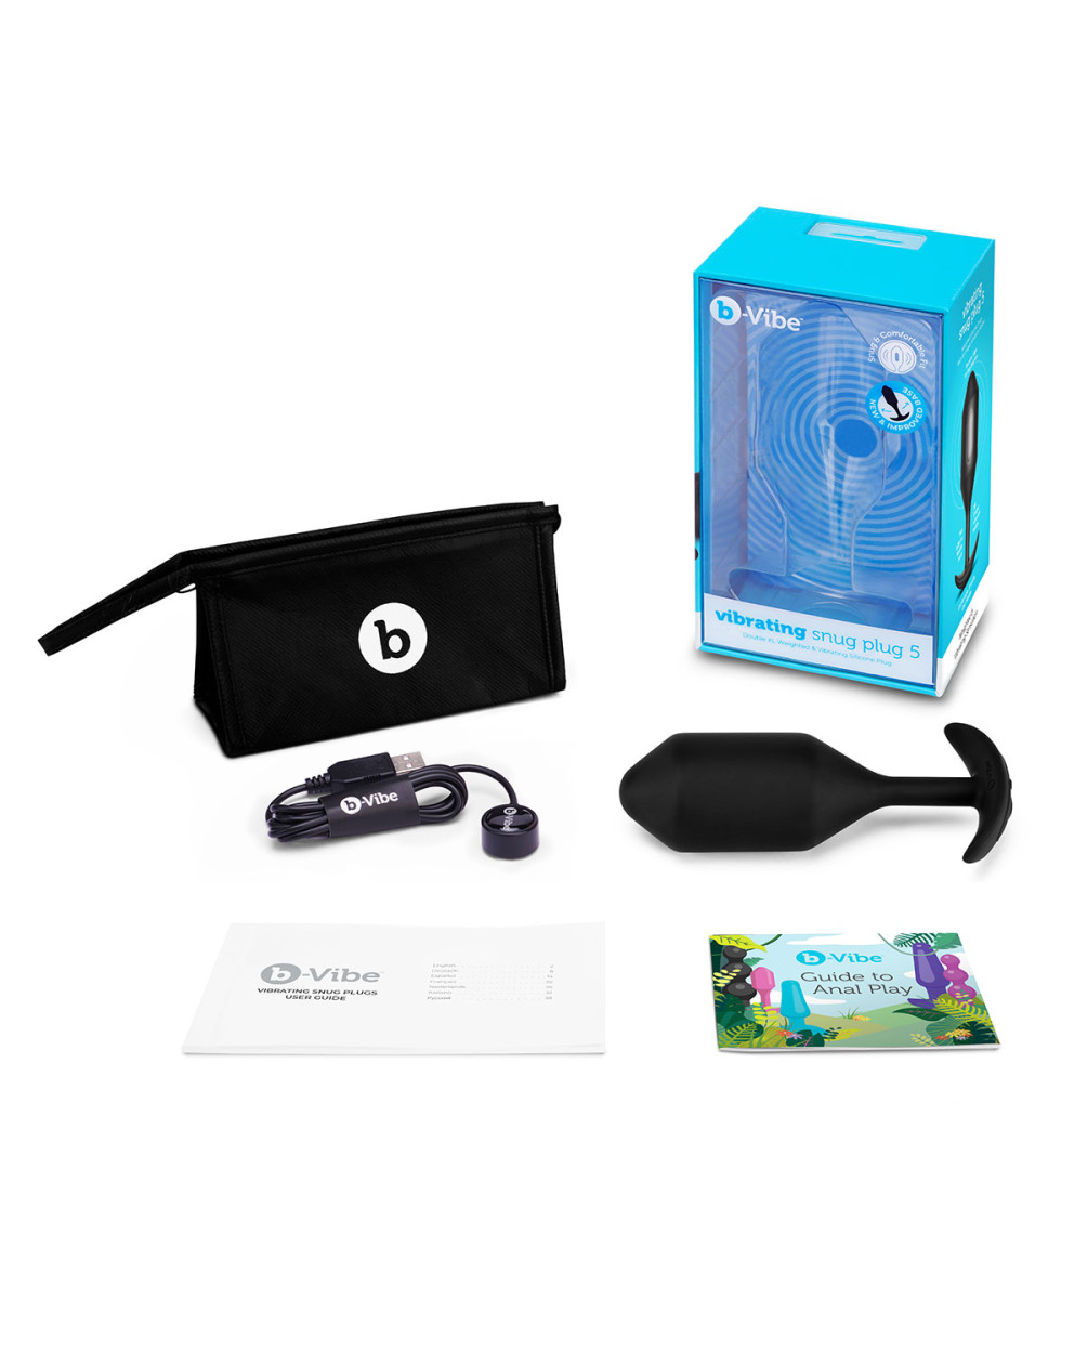 B-Vibe Vibrating Snug Plug 5 (XXL) - Black showing toy and box contents